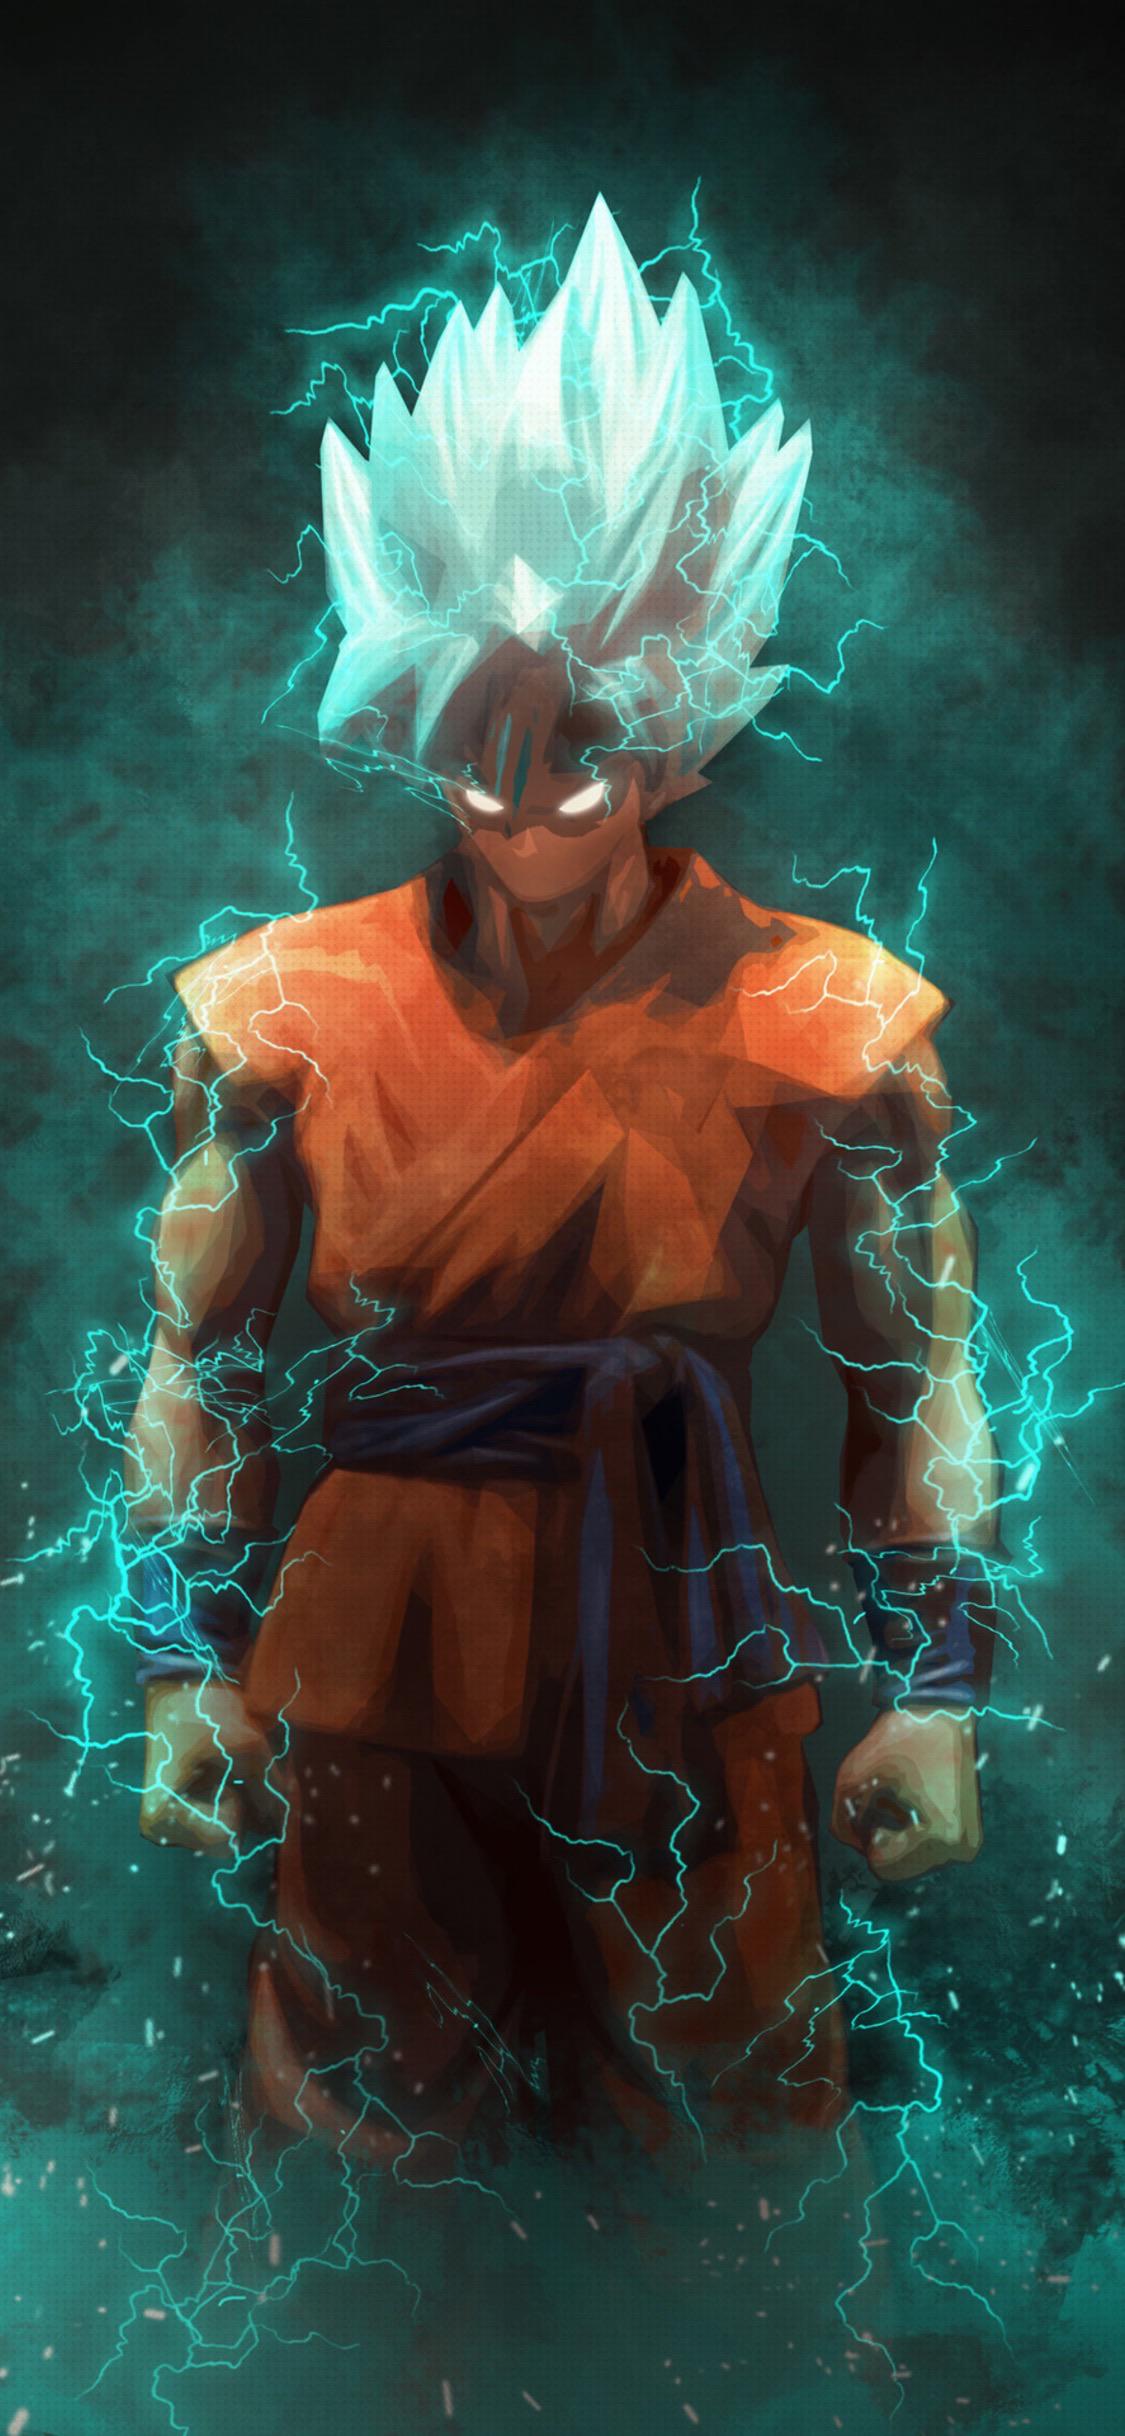 Goku Art wallpaper for iPhone 11